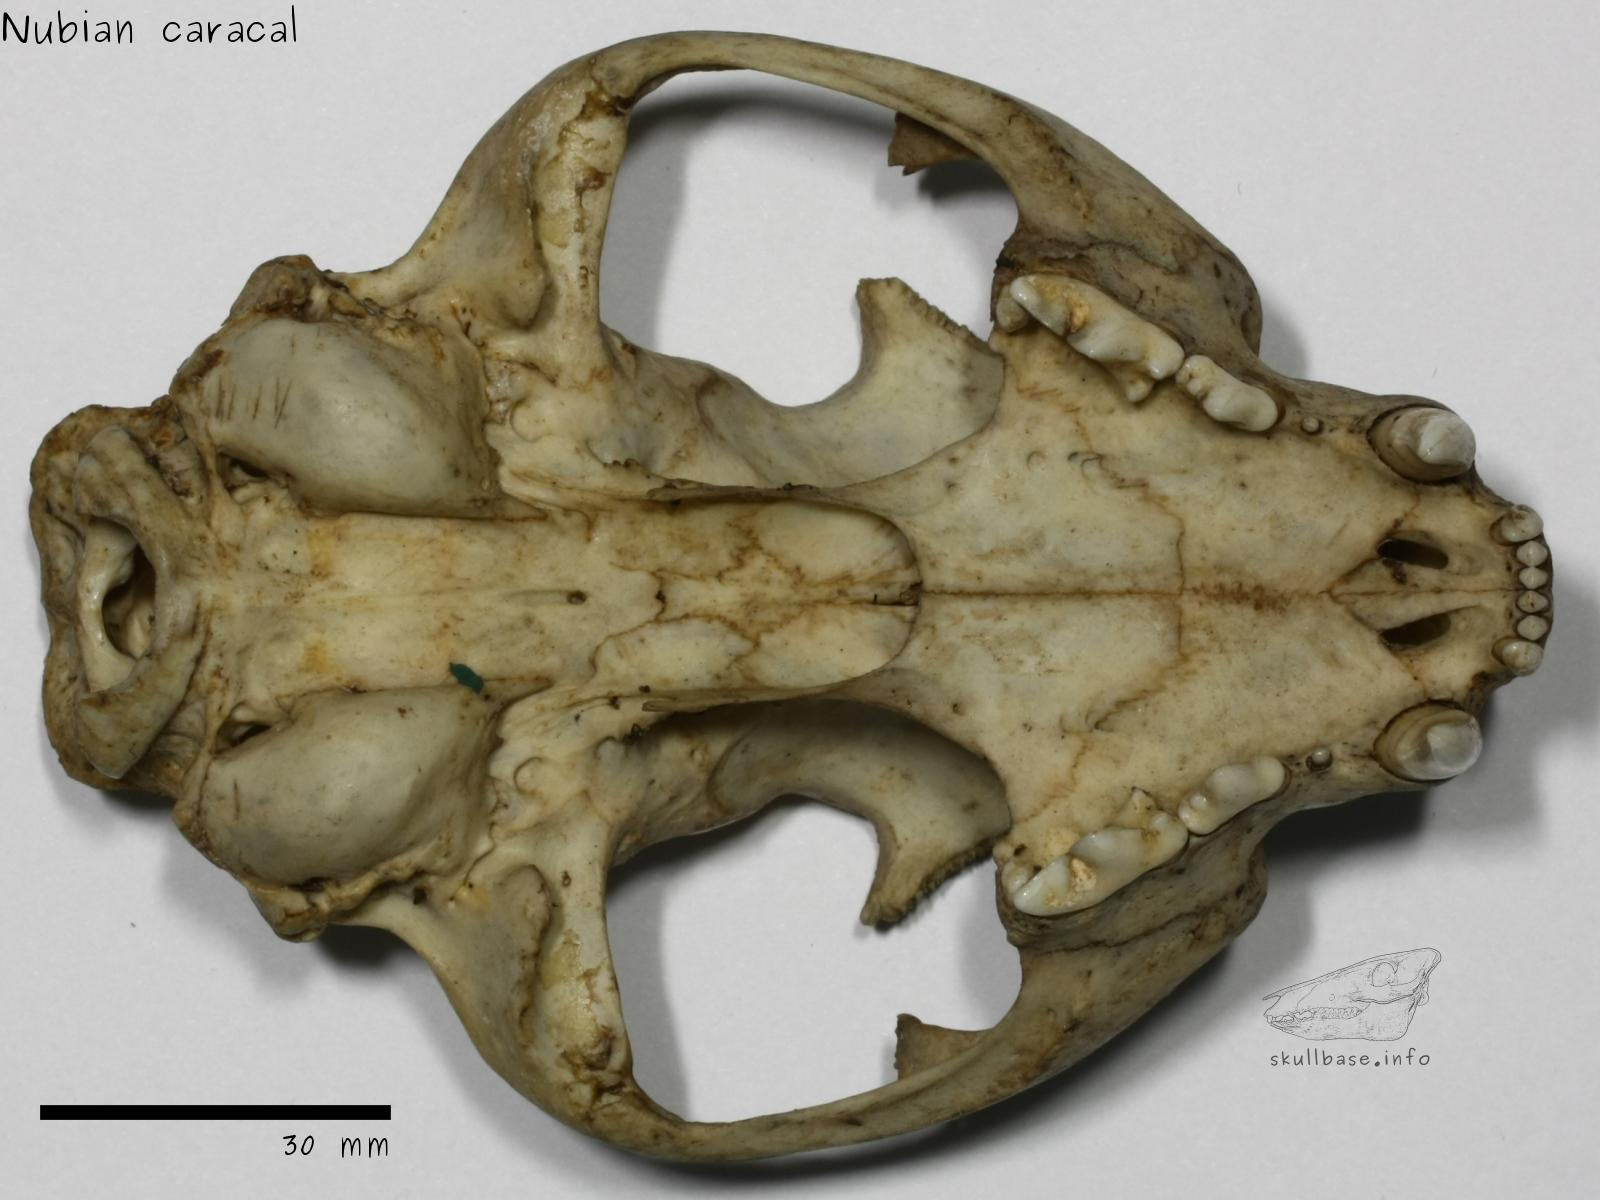 Nubian caracal (Caracal caracal nubica) skull ventral view